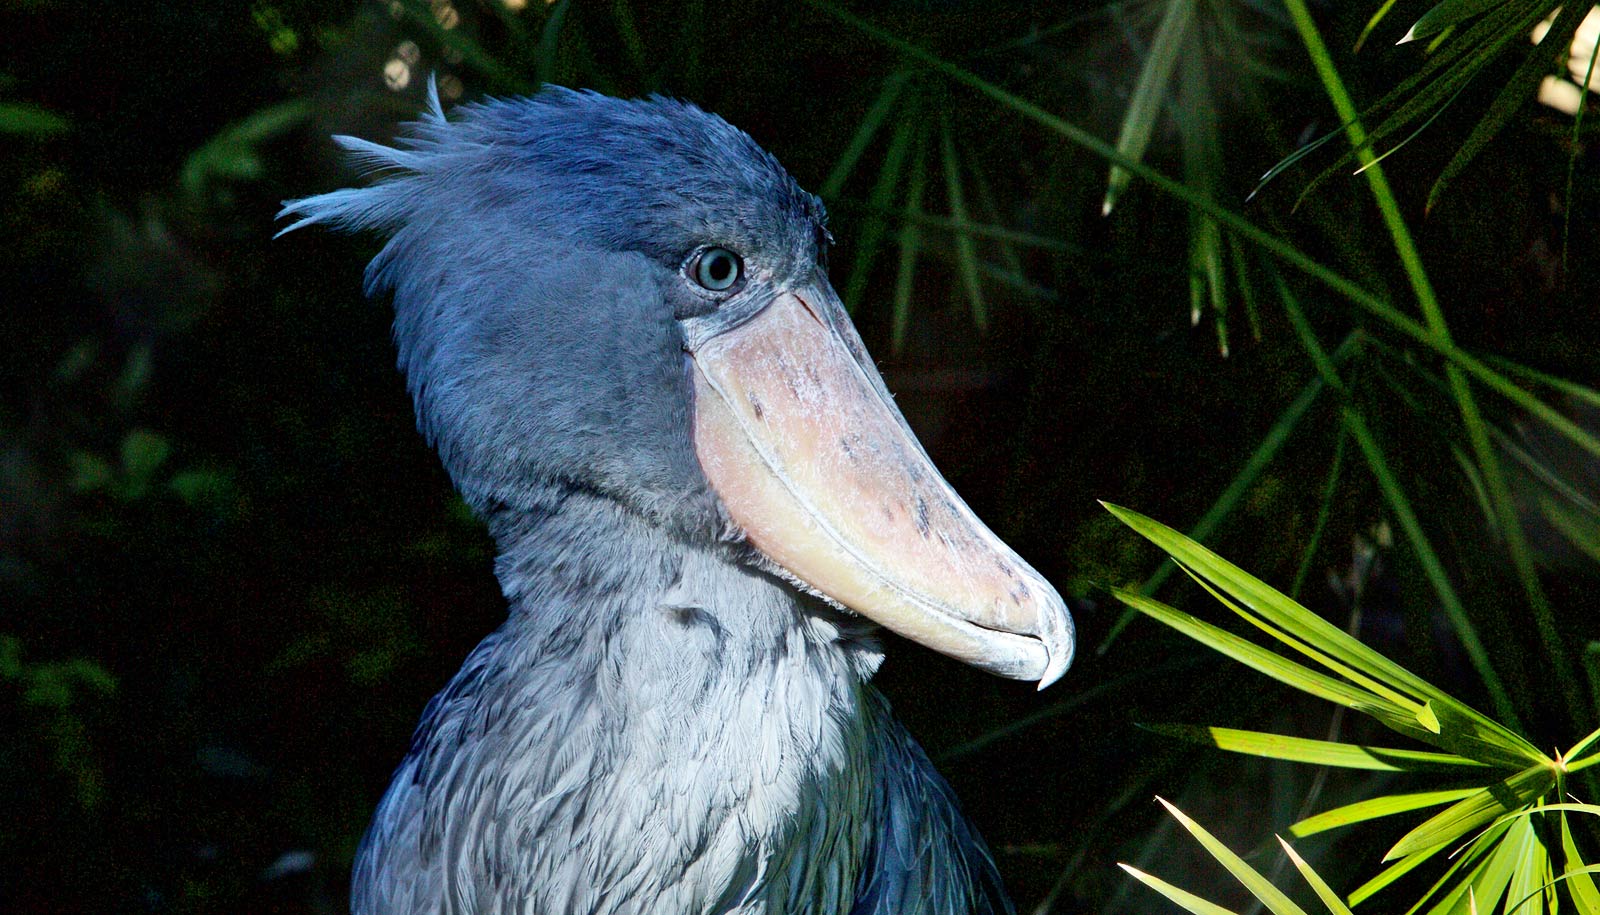 How birds evolved such crazy beaks - Futurity